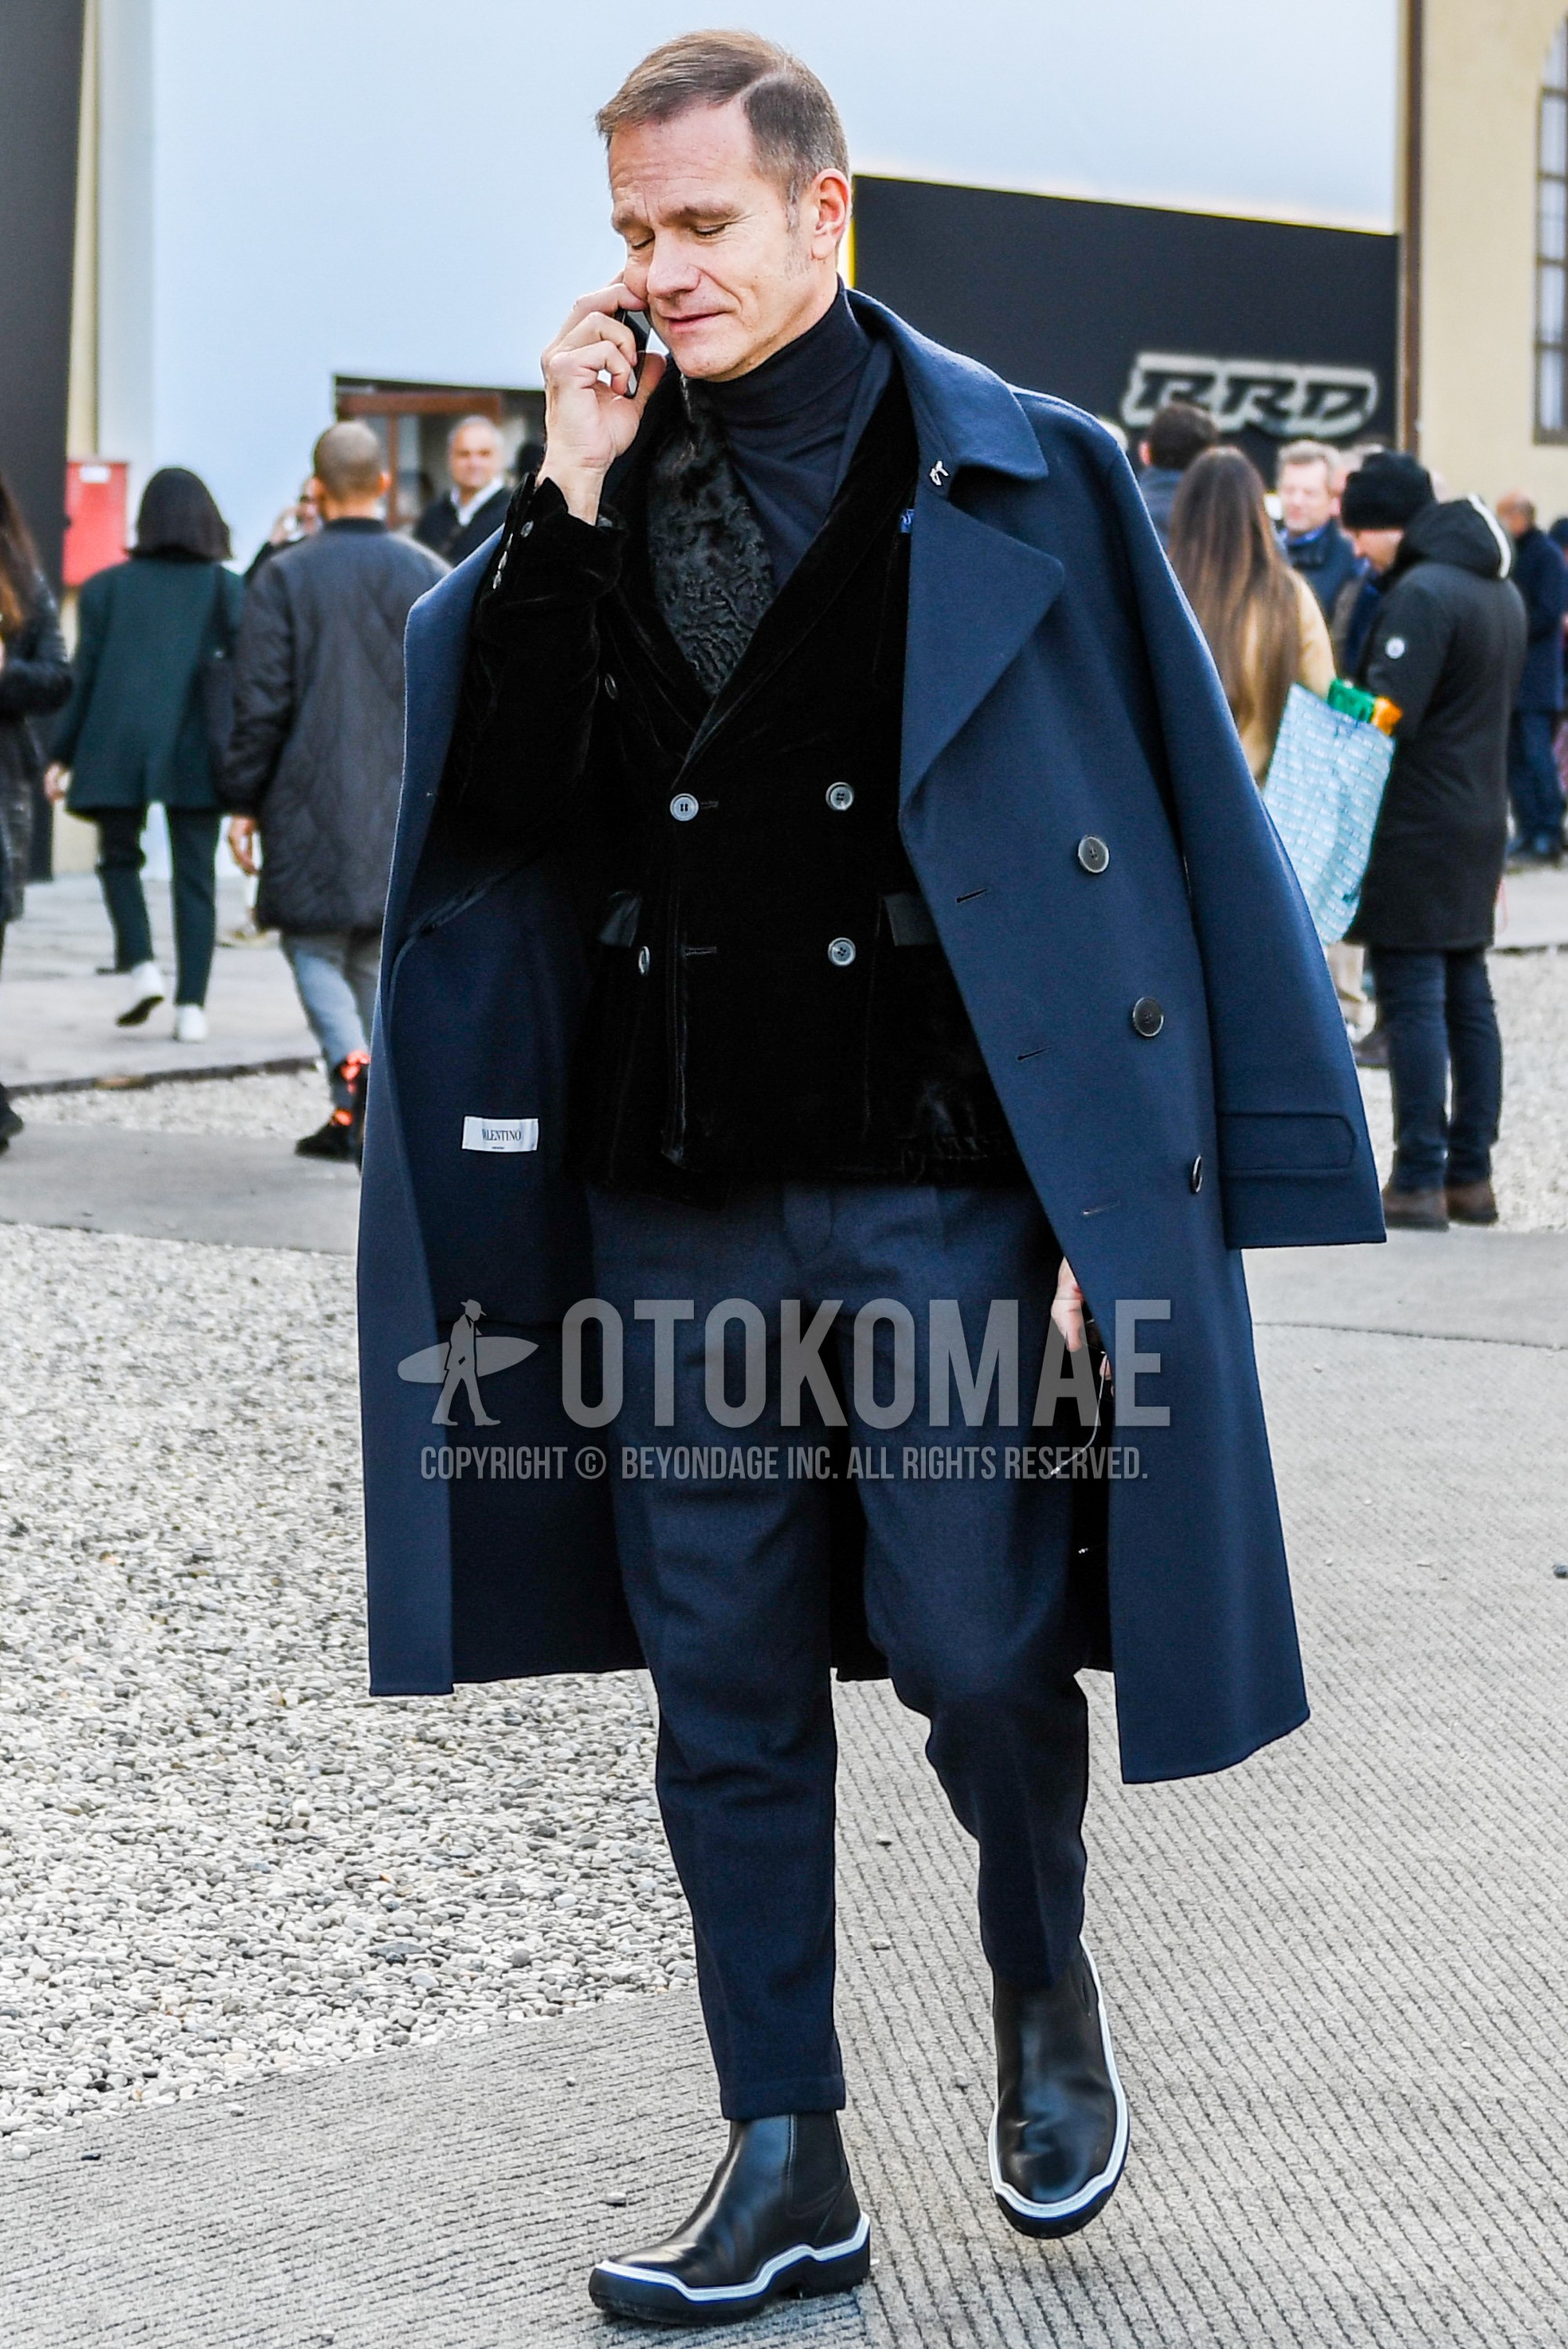 Men's winter outfit with blue plain ulster coat, black plain tailored jacket, dark gray plain turtleneck knit, dark gray plain slacks, black  boots.